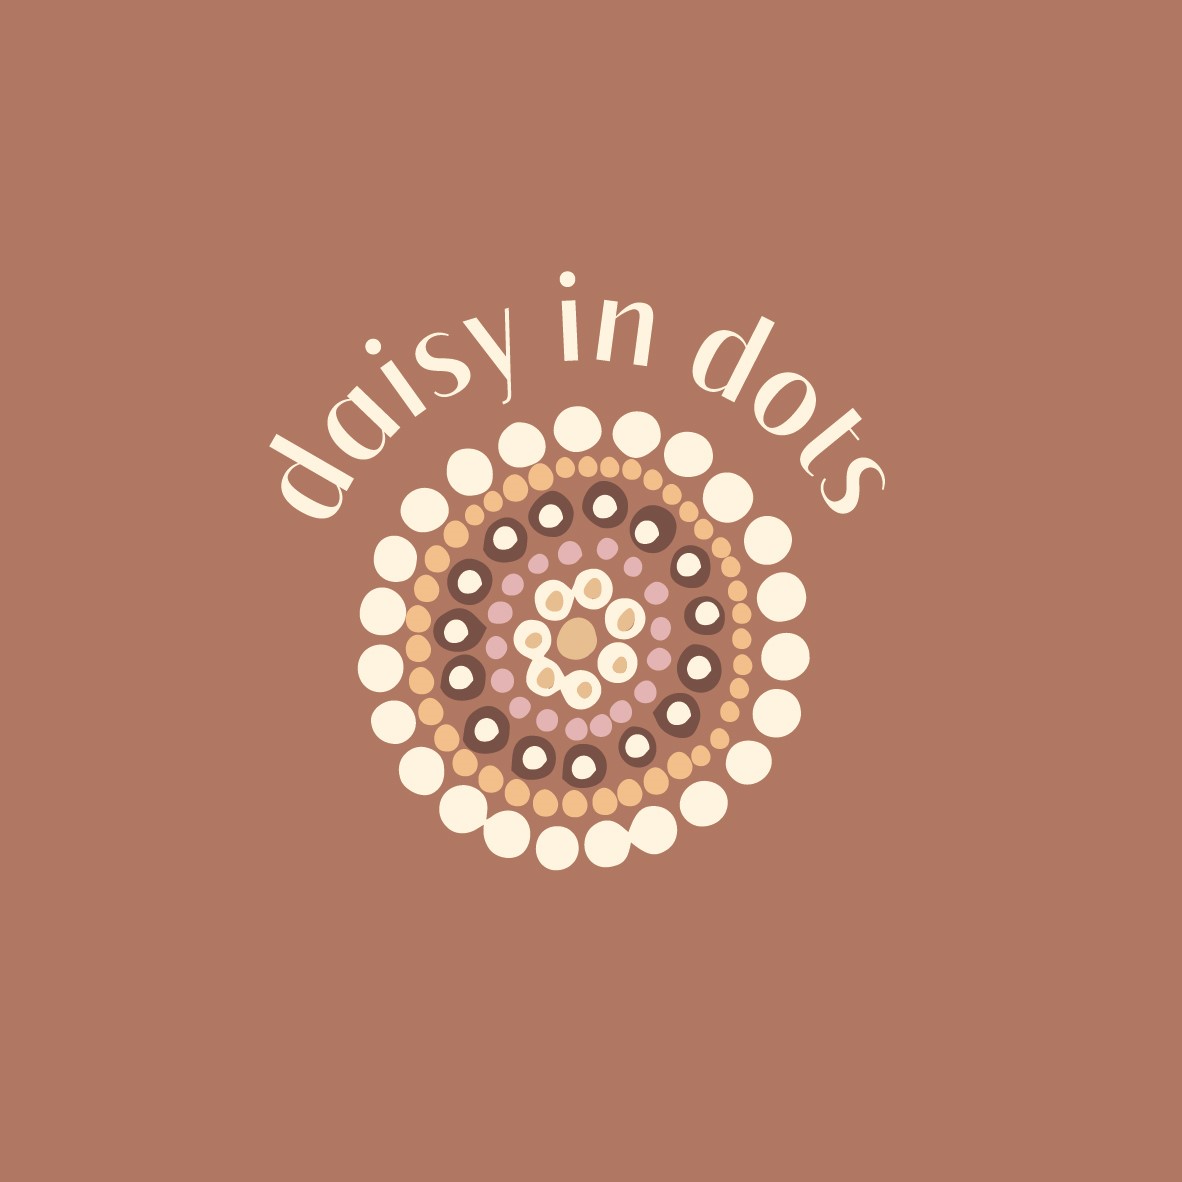 Animals, Australian, Typography, Indigenous, Fashion, DG Designs, Daisy in Dots Artworks